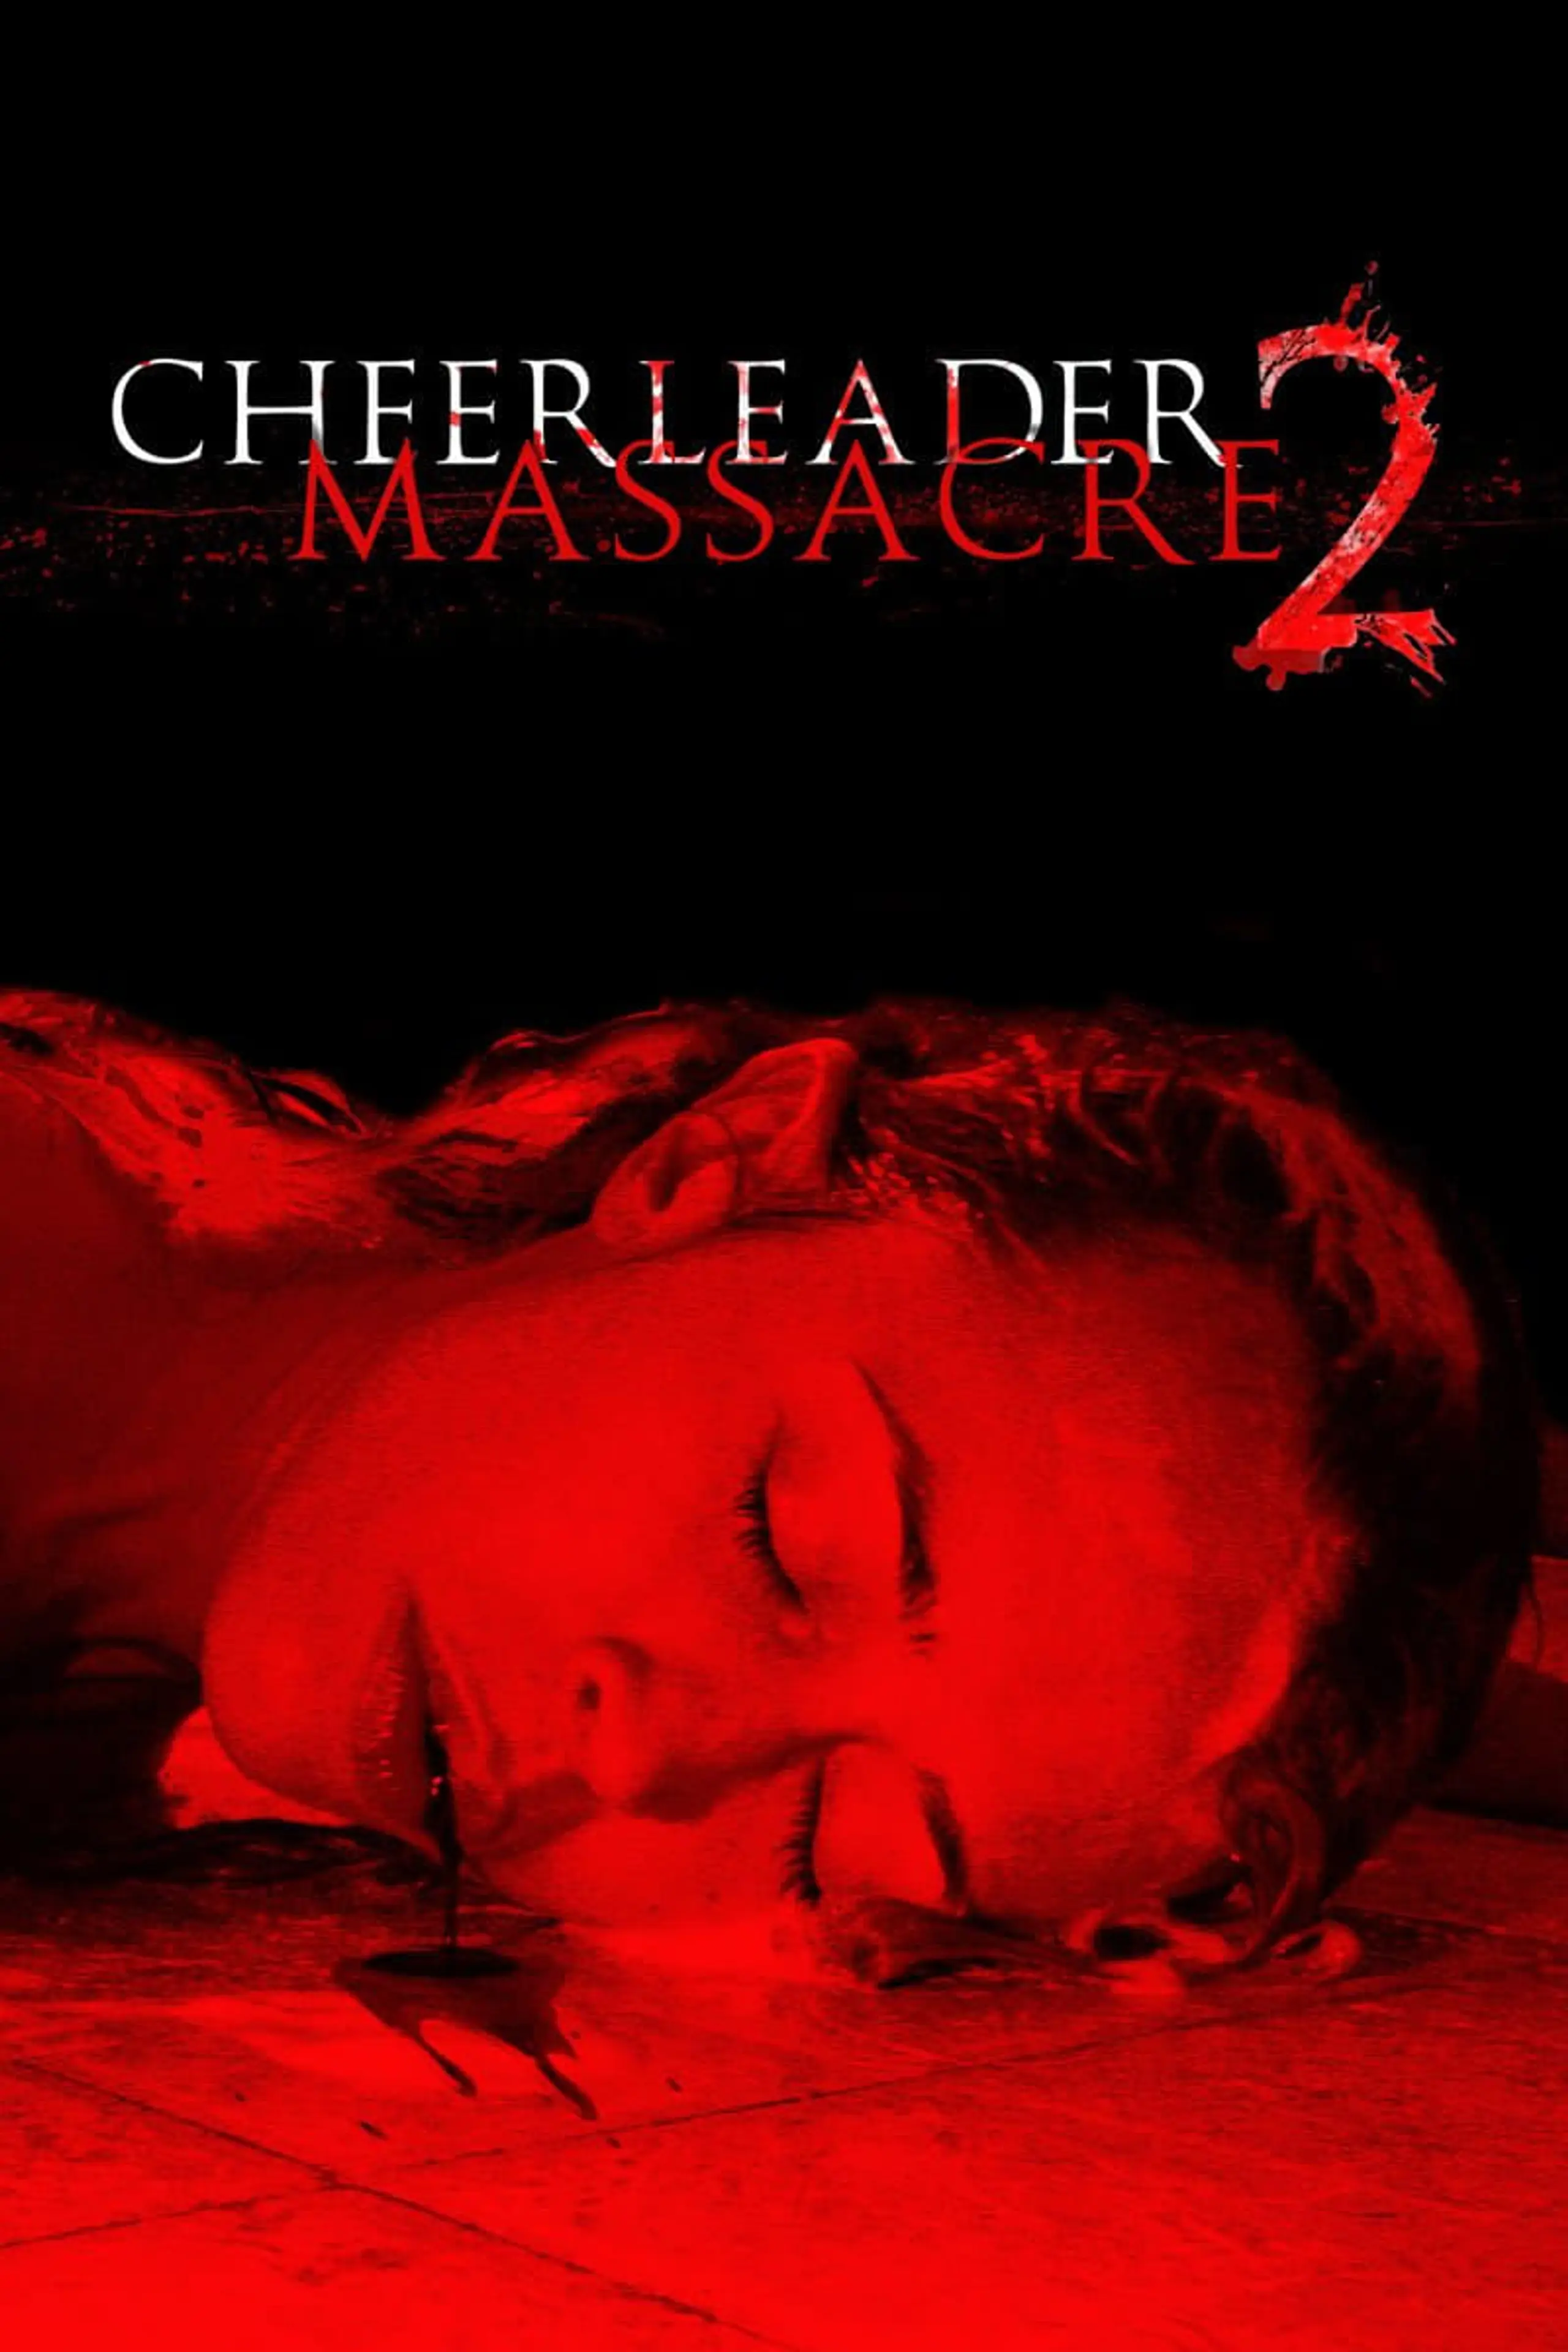 Cheerleader Massacre 2